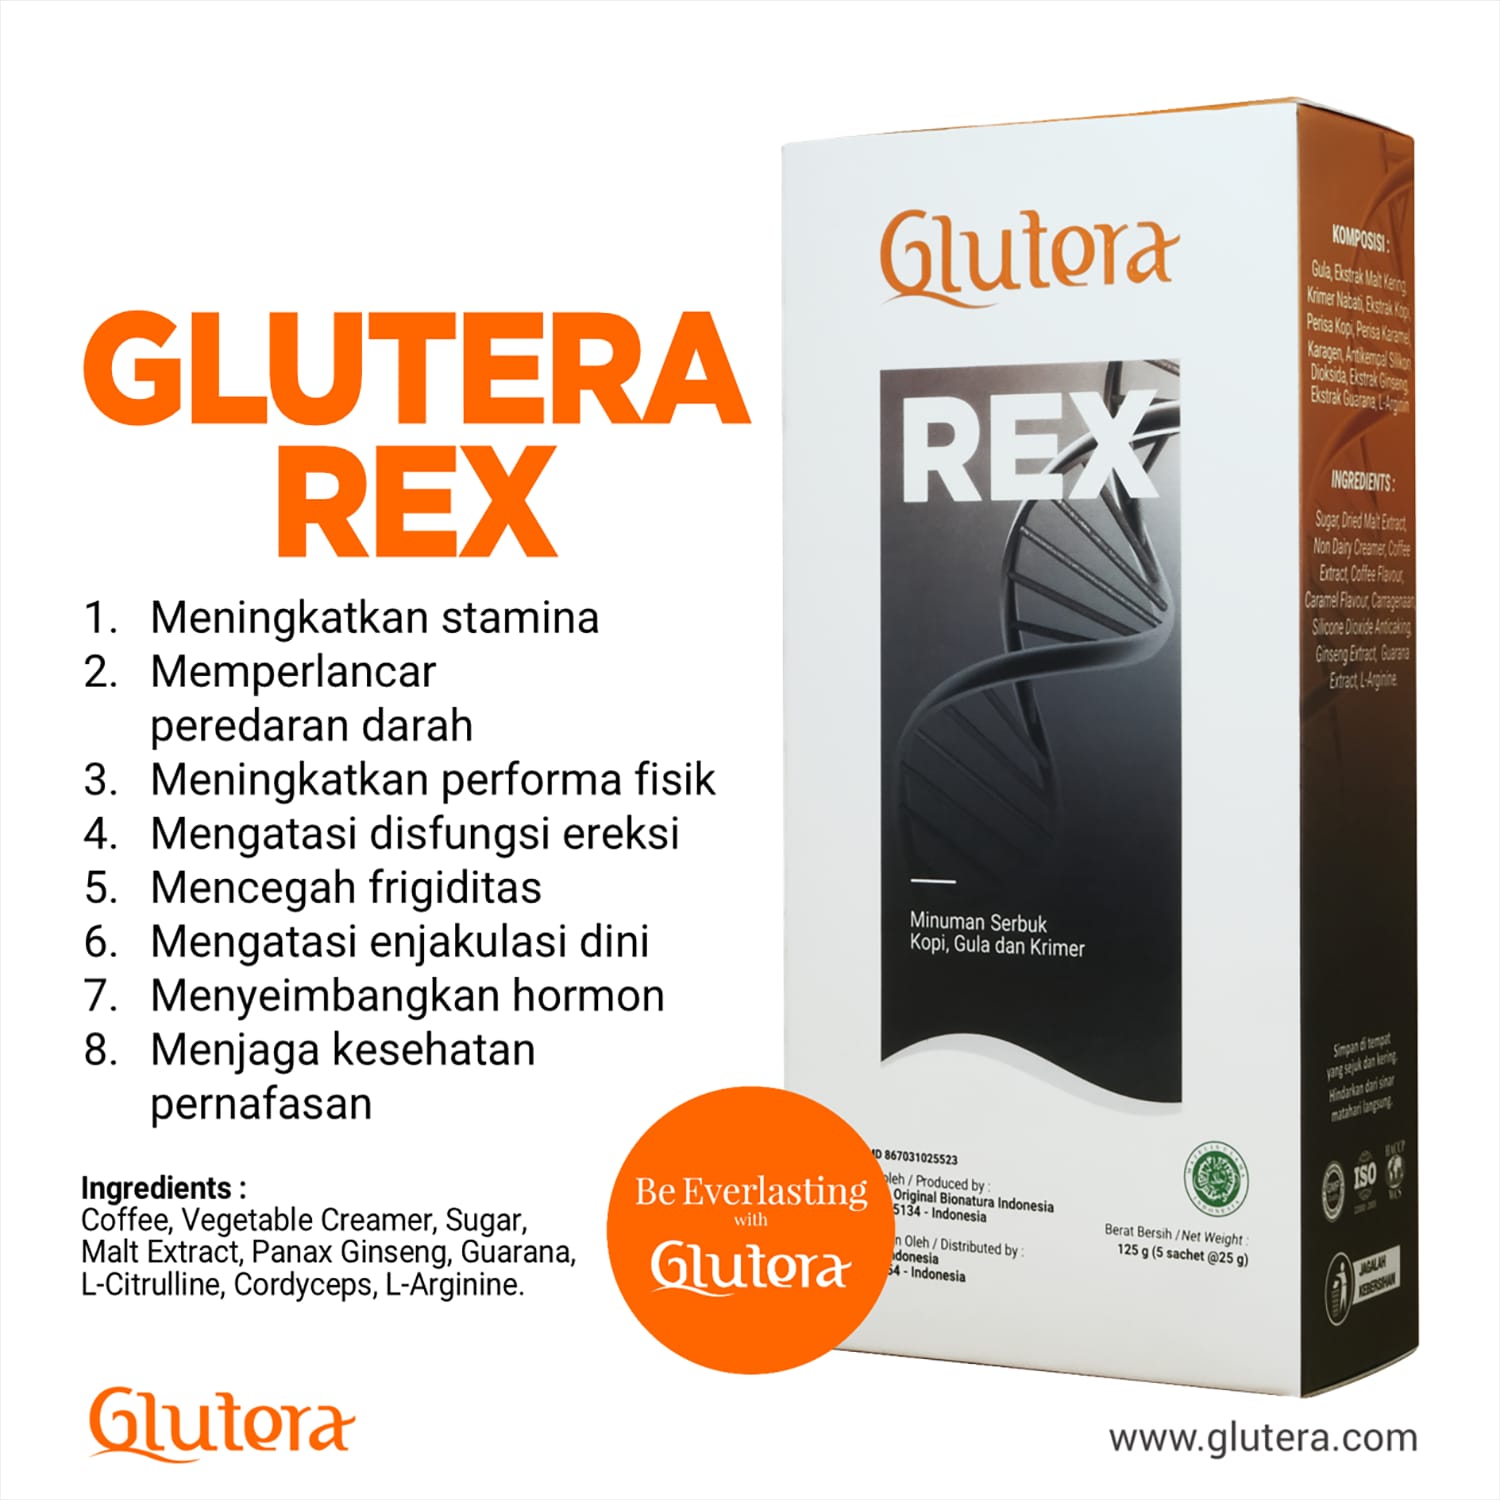 Glutera REX